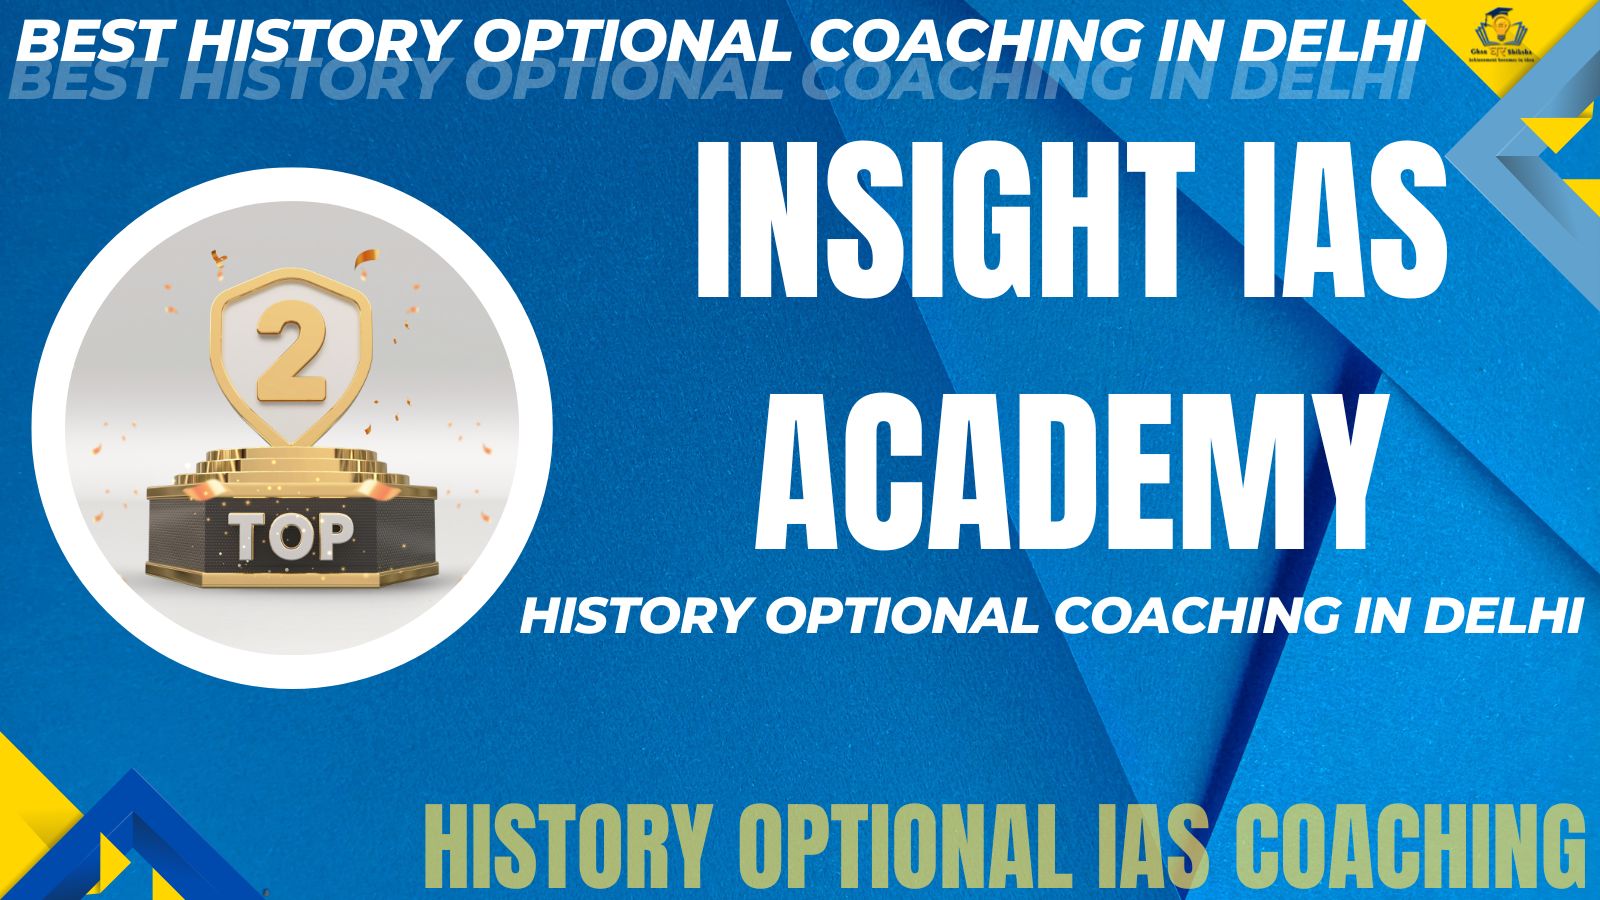 Top History Optional Coaching Institute In Delhi